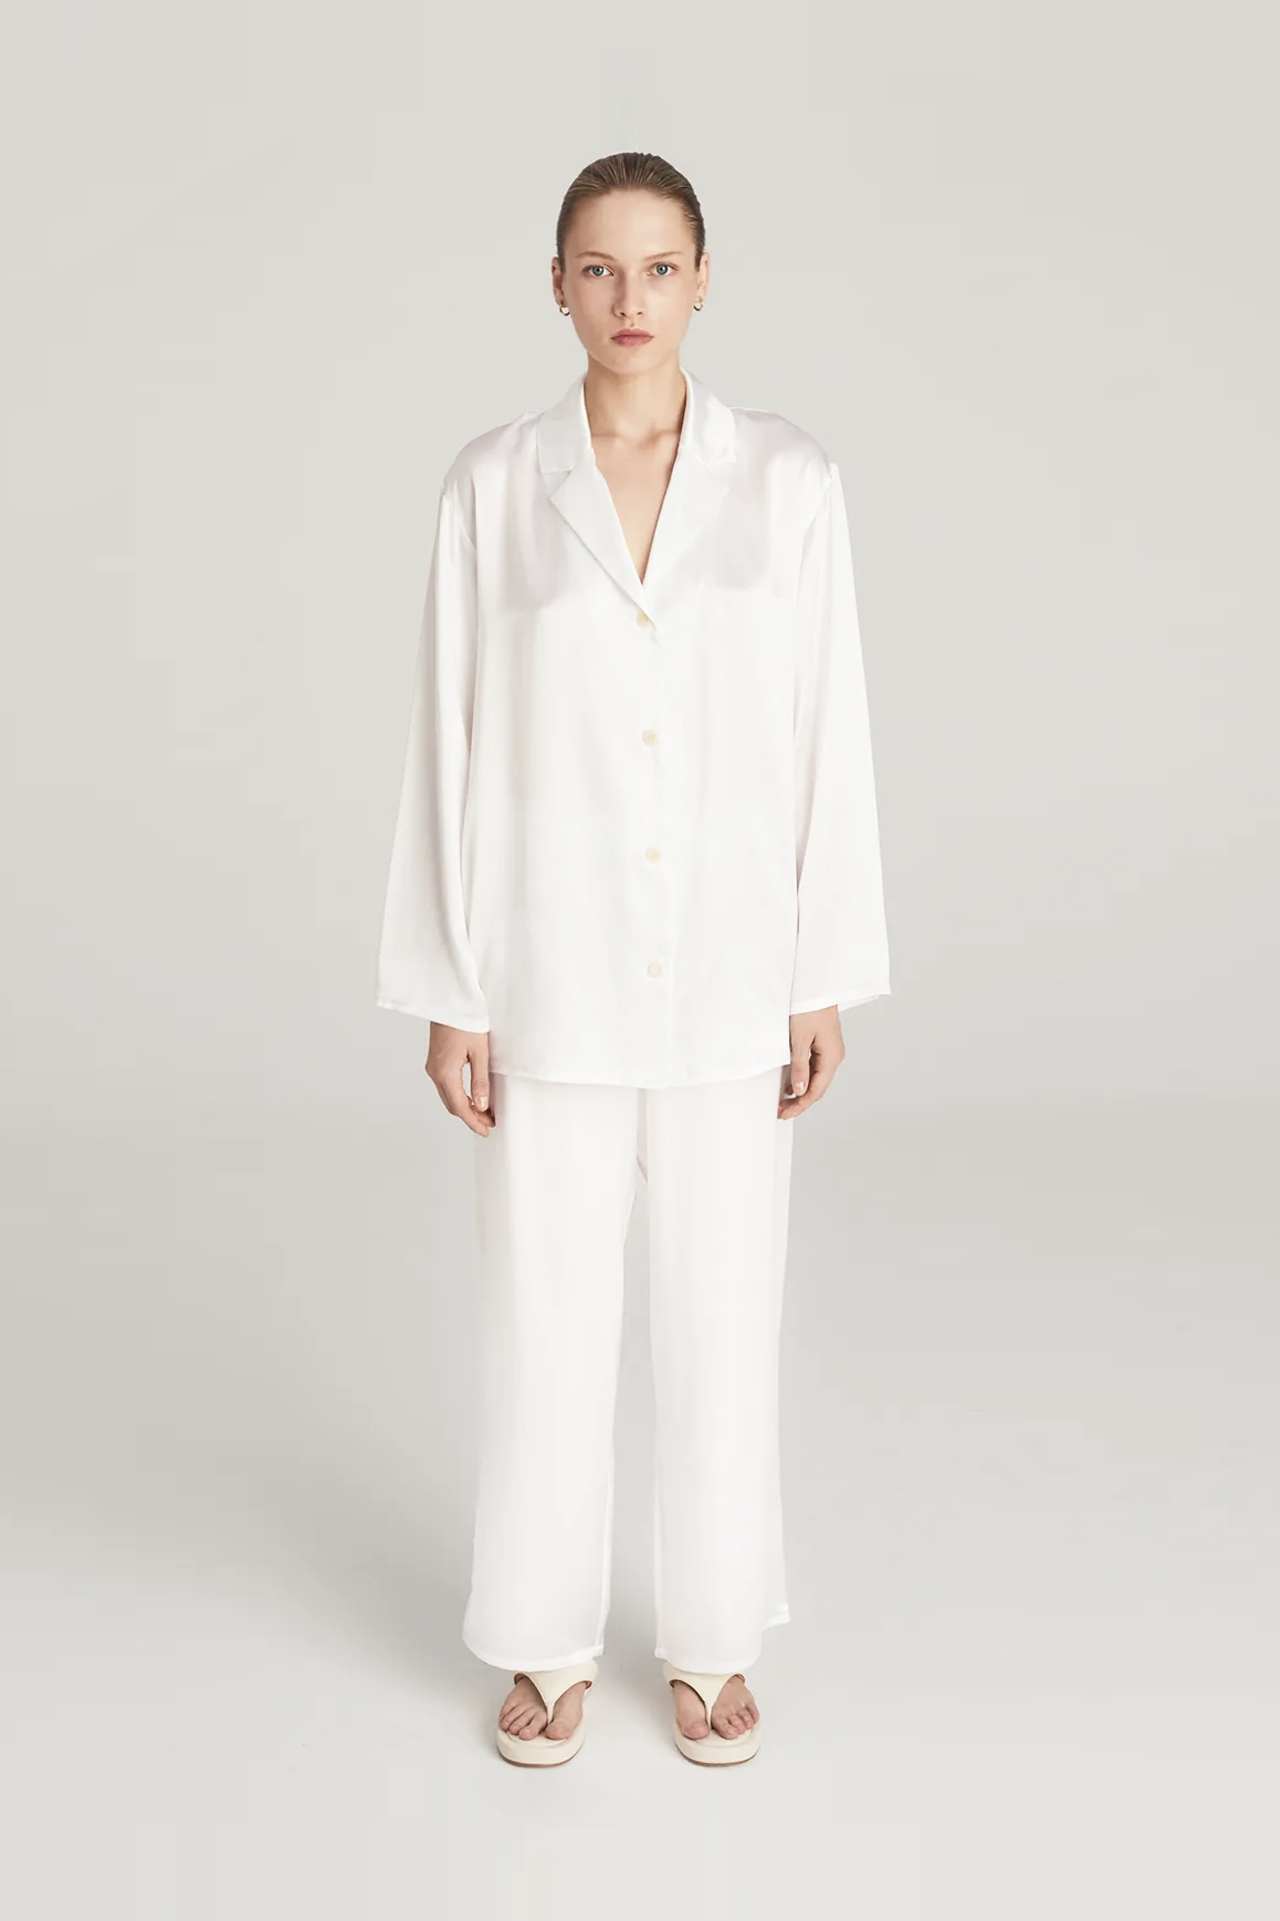 Silk satin pyjama set: white oversized shirt and wide leg pants